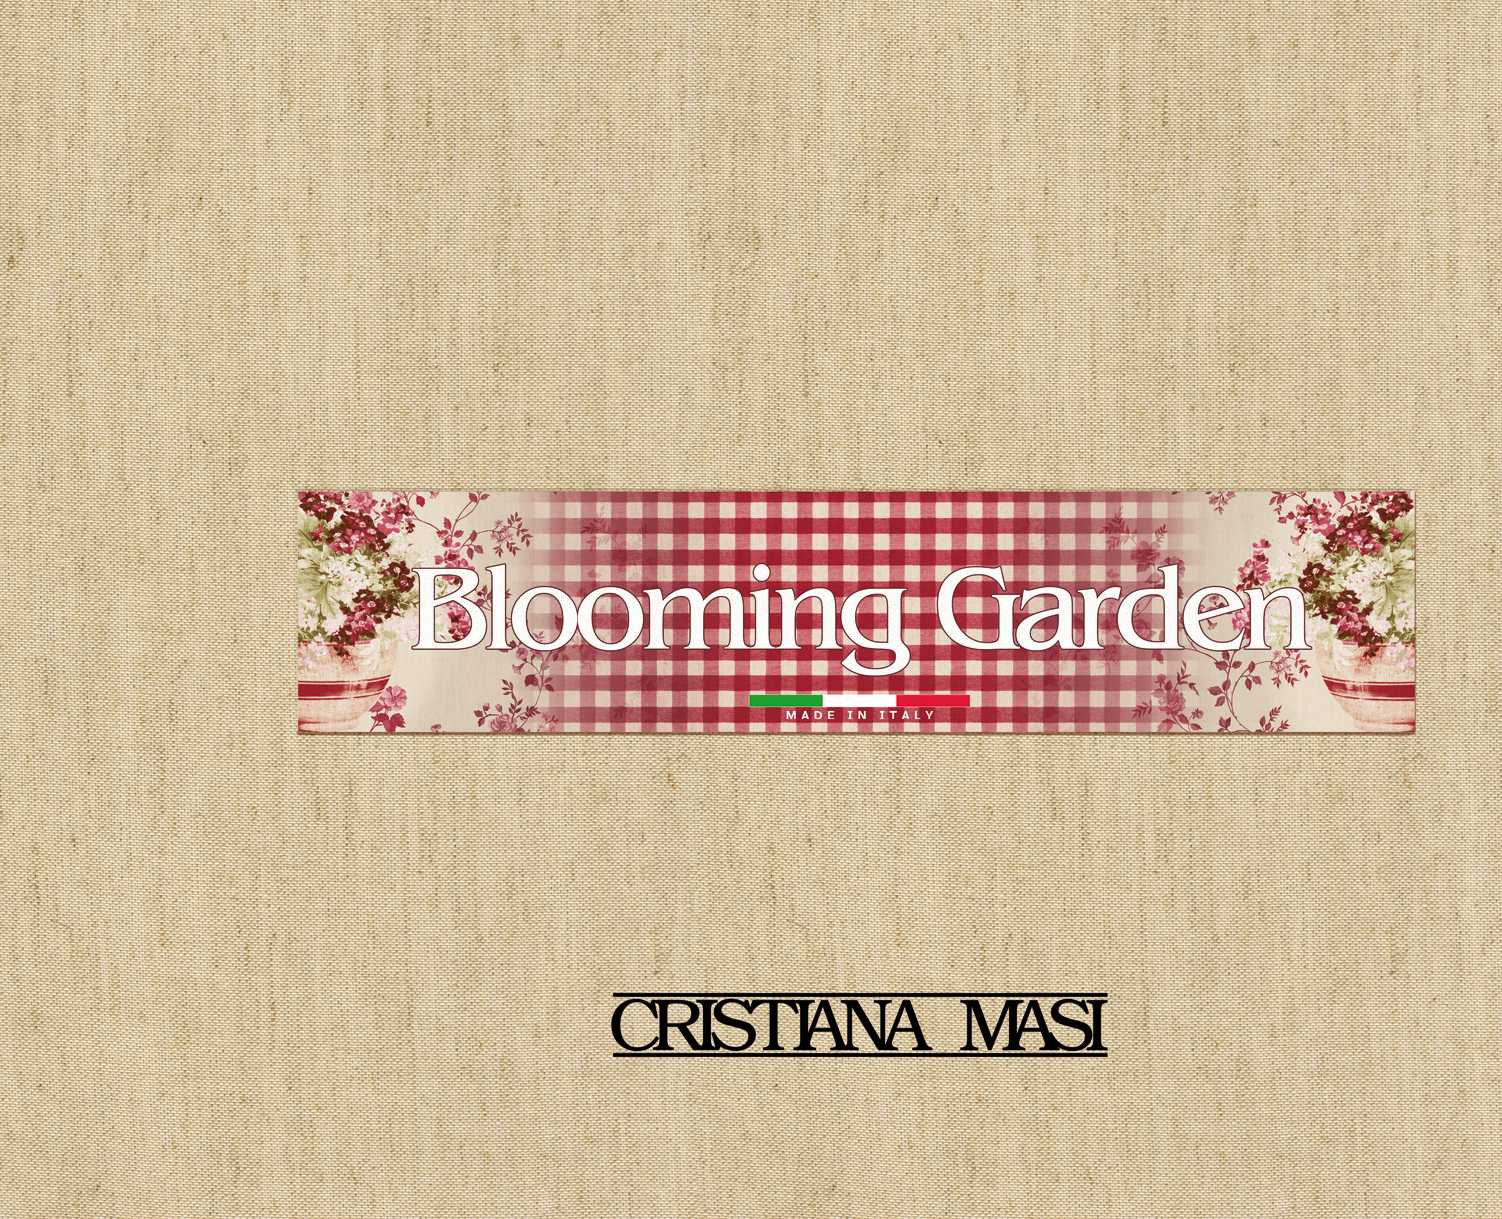 Katalog Blooming Garden